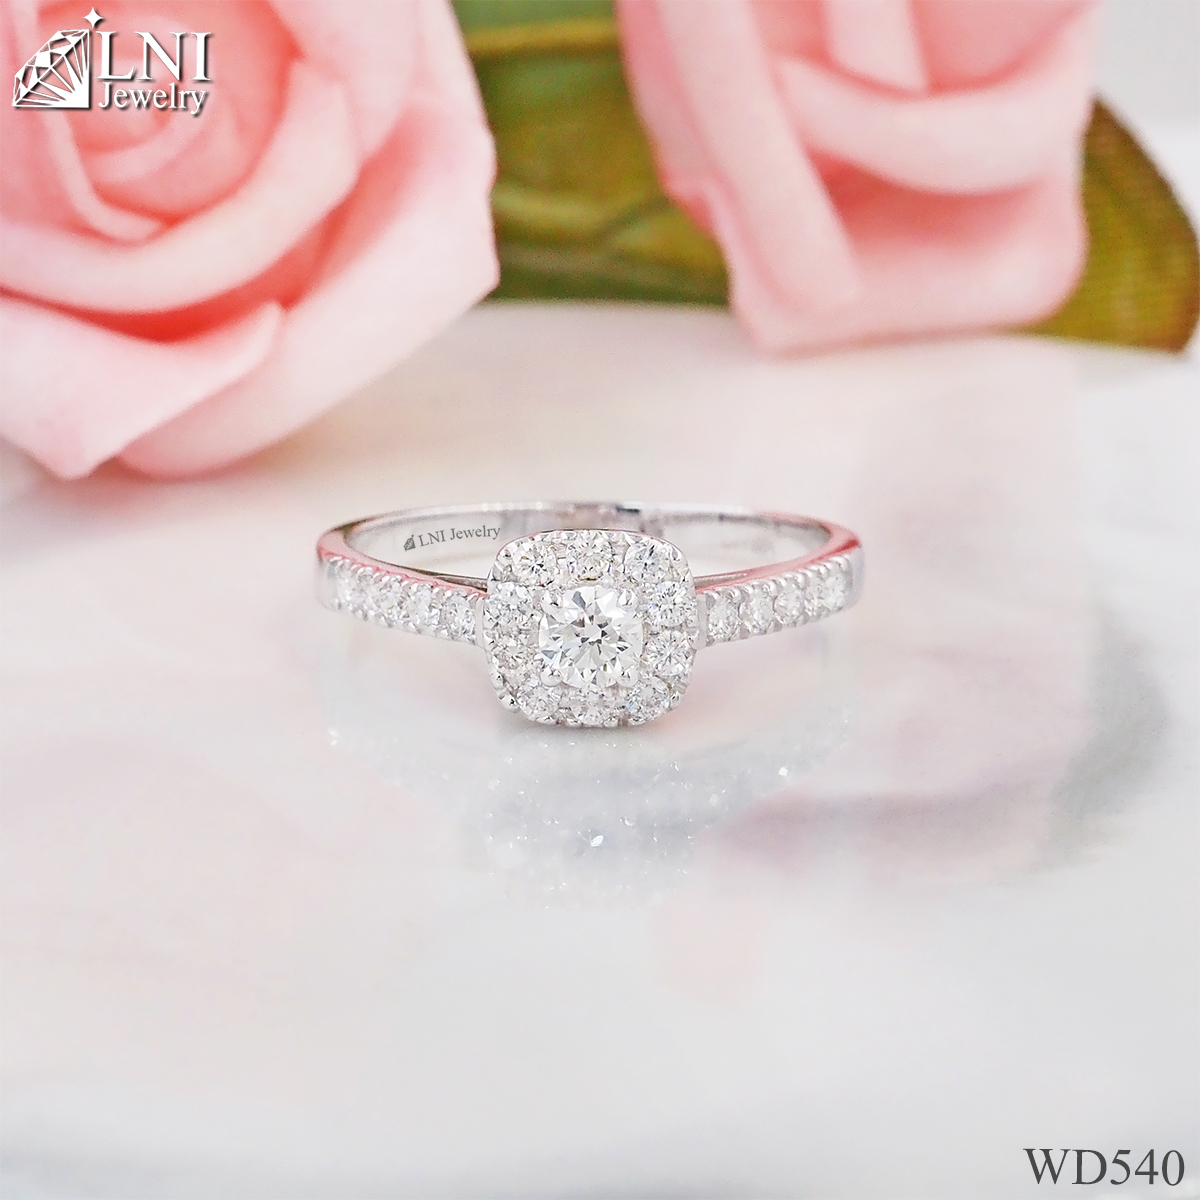 WD540 Halo Diamond Ring